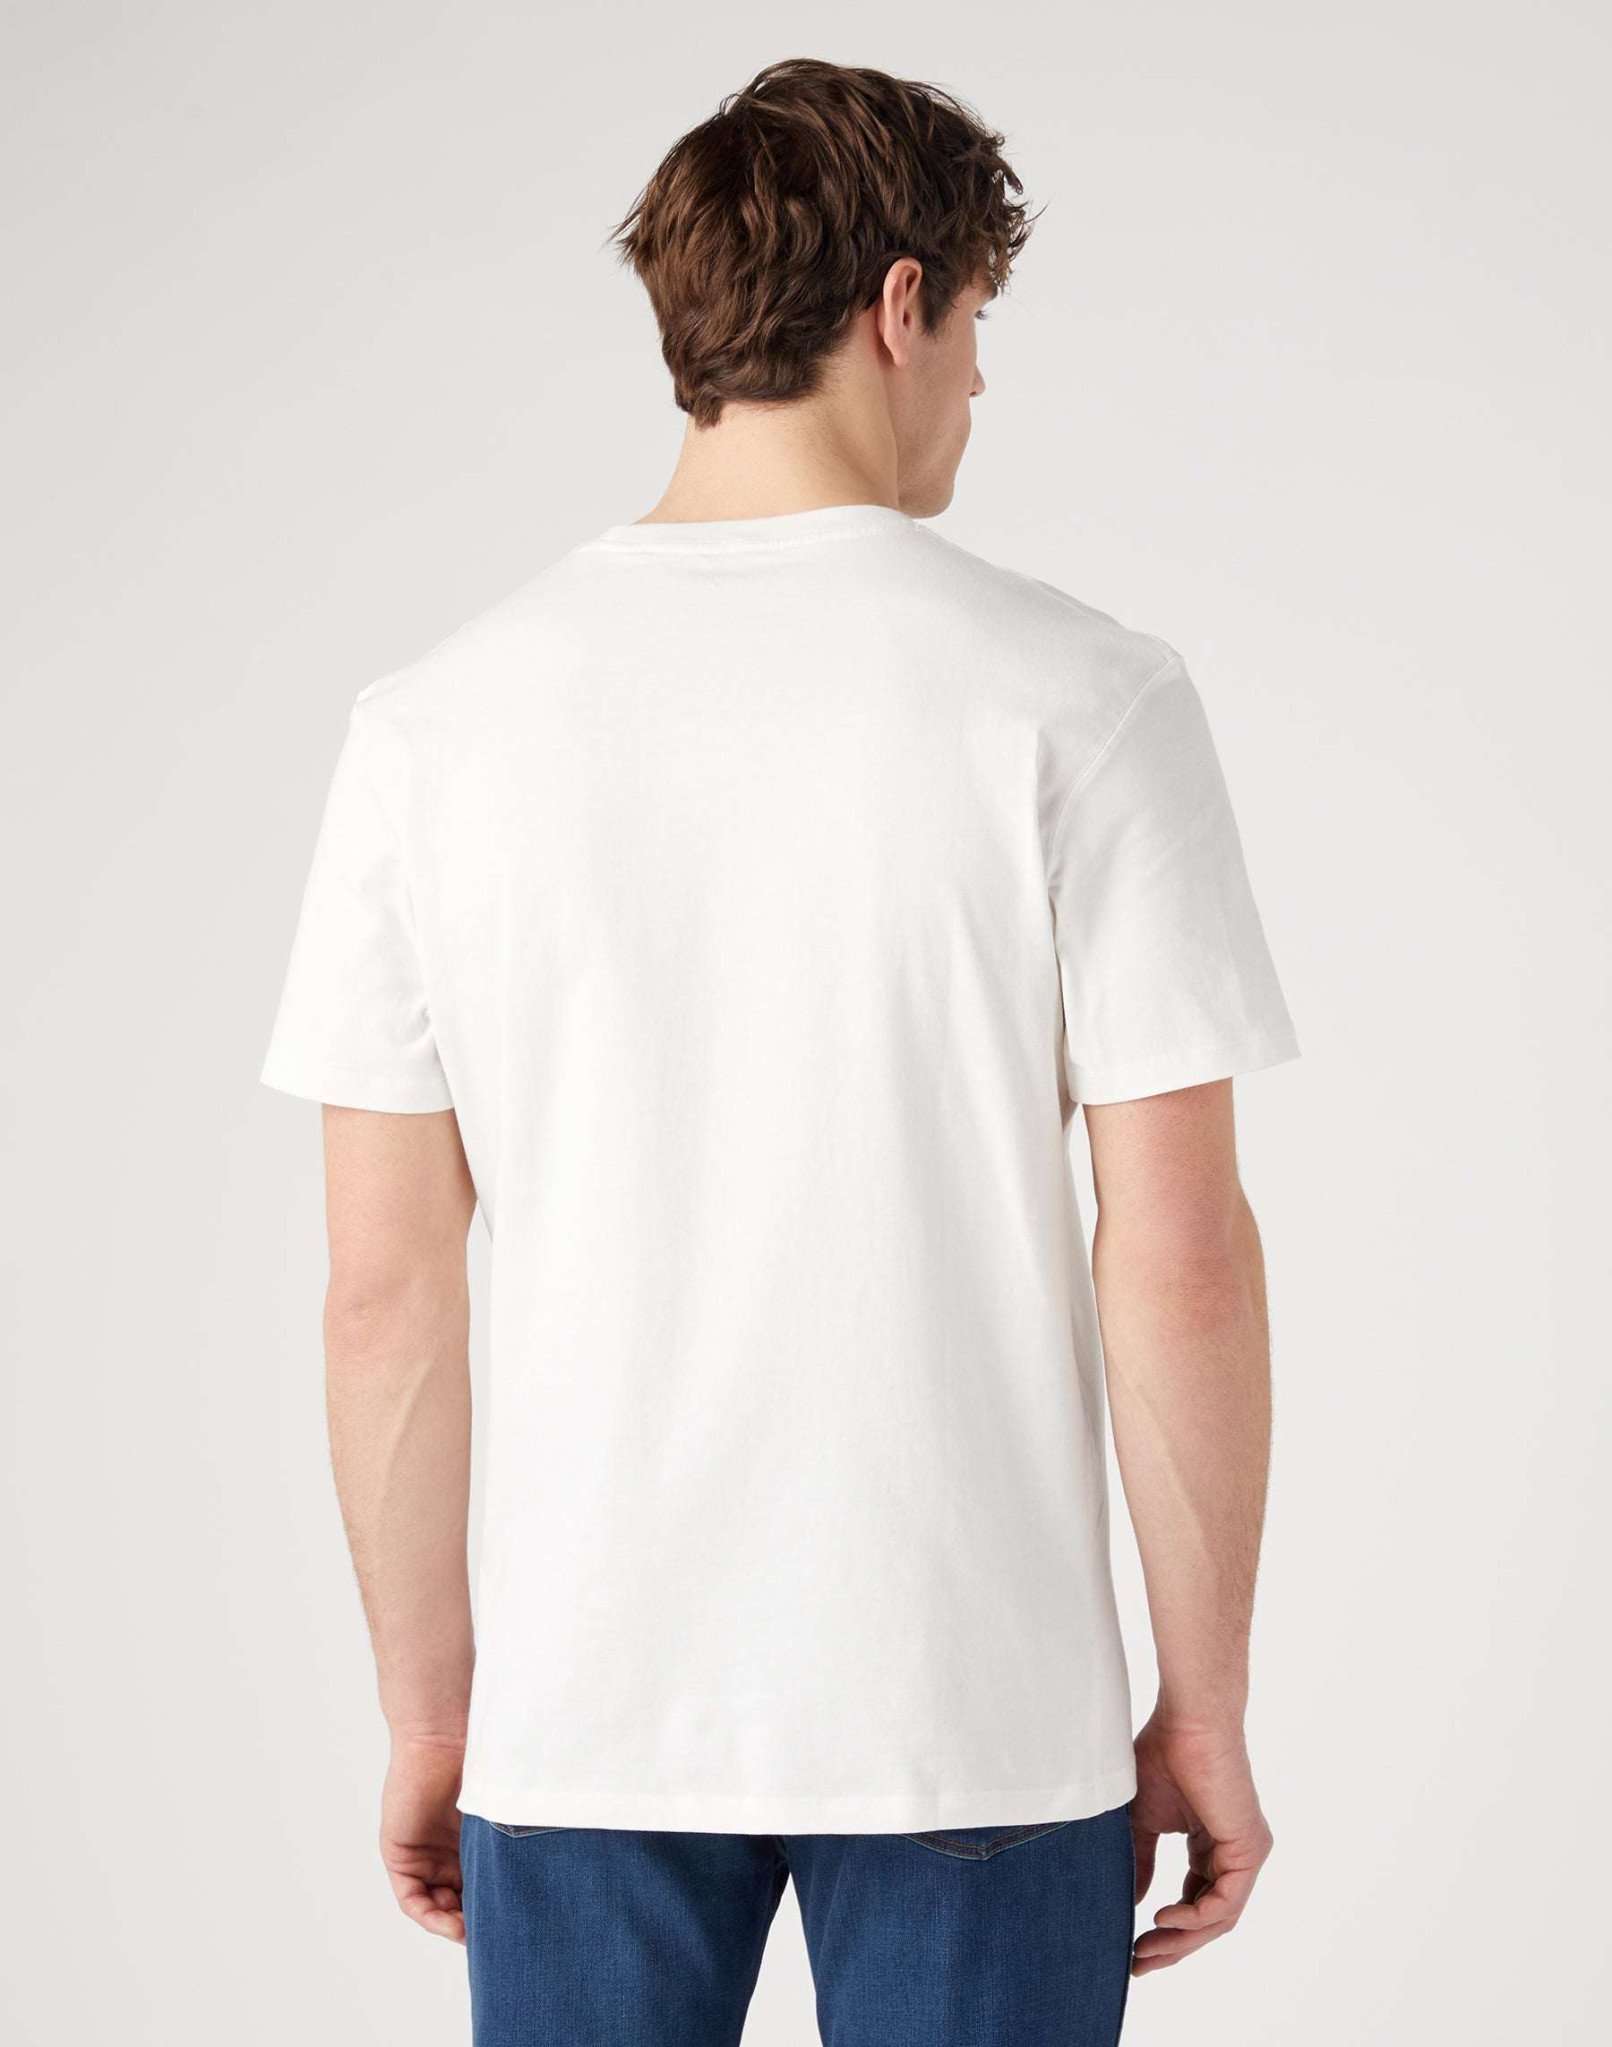 Americana Tee in Worn White T-Shirts Wrangler   